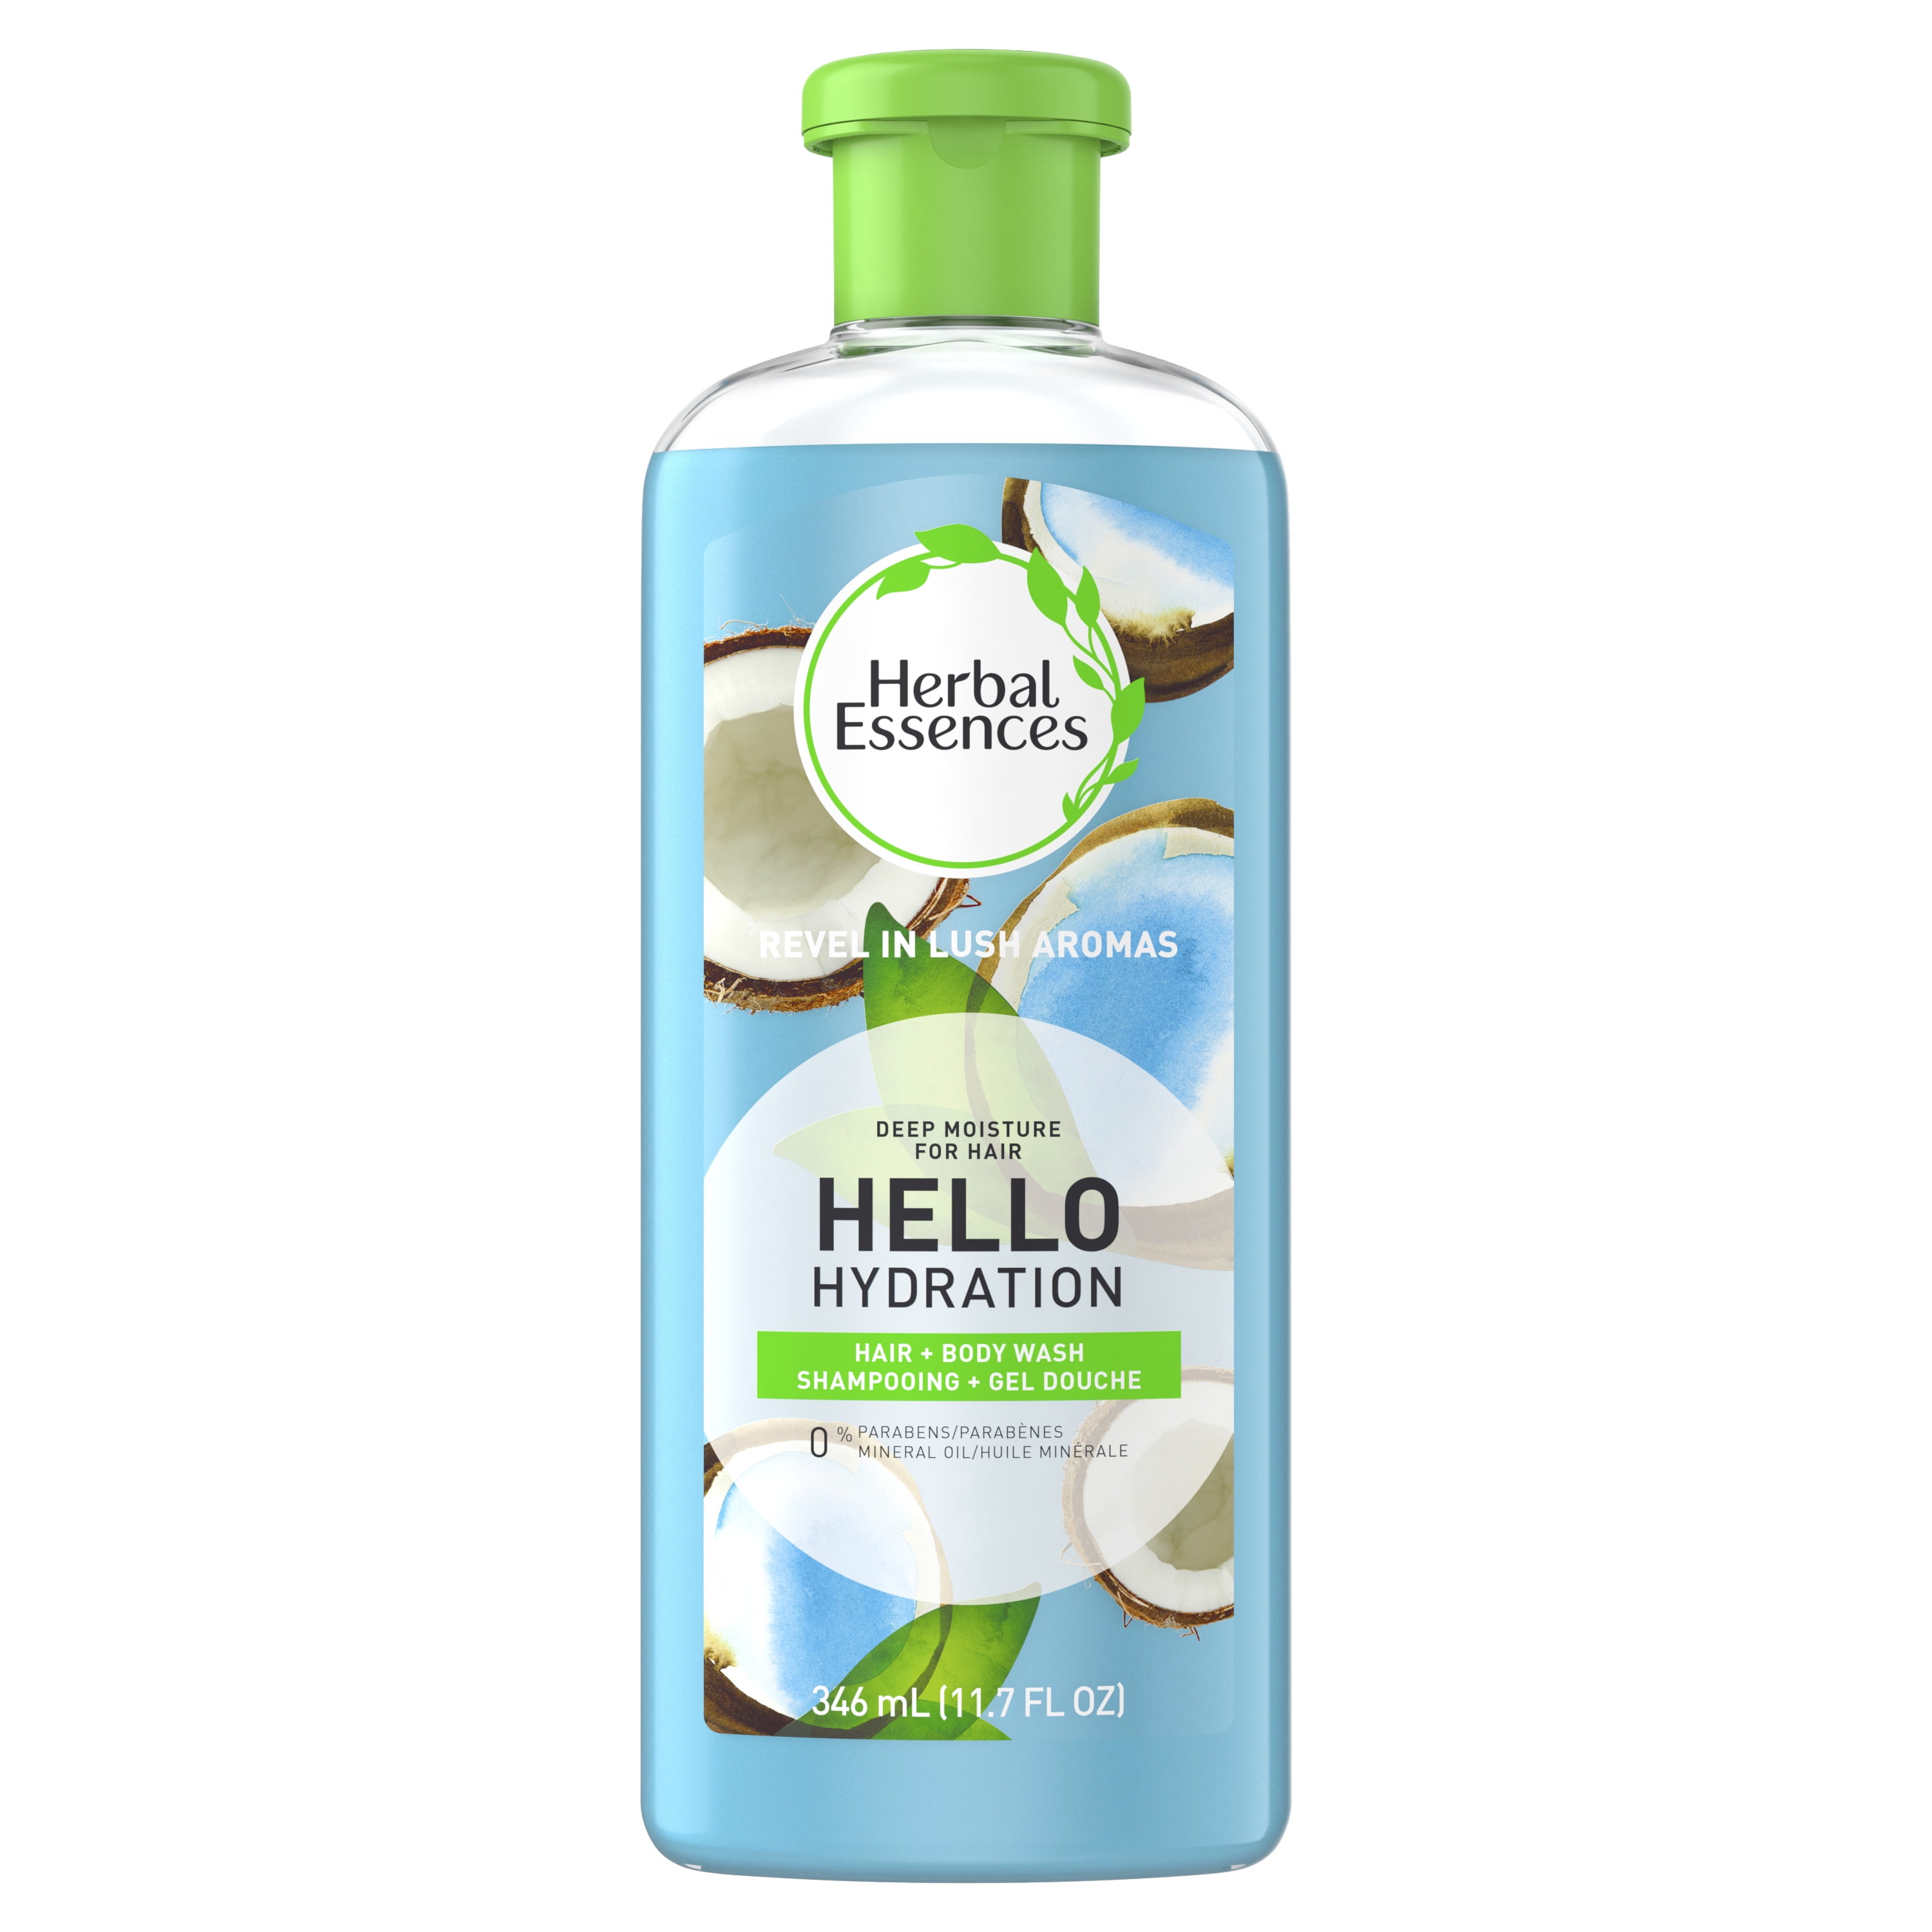 Herbal Essences Hello Hydration Shampoo And Body Wash Deep Moisture For Hair 117 Fl Oz 